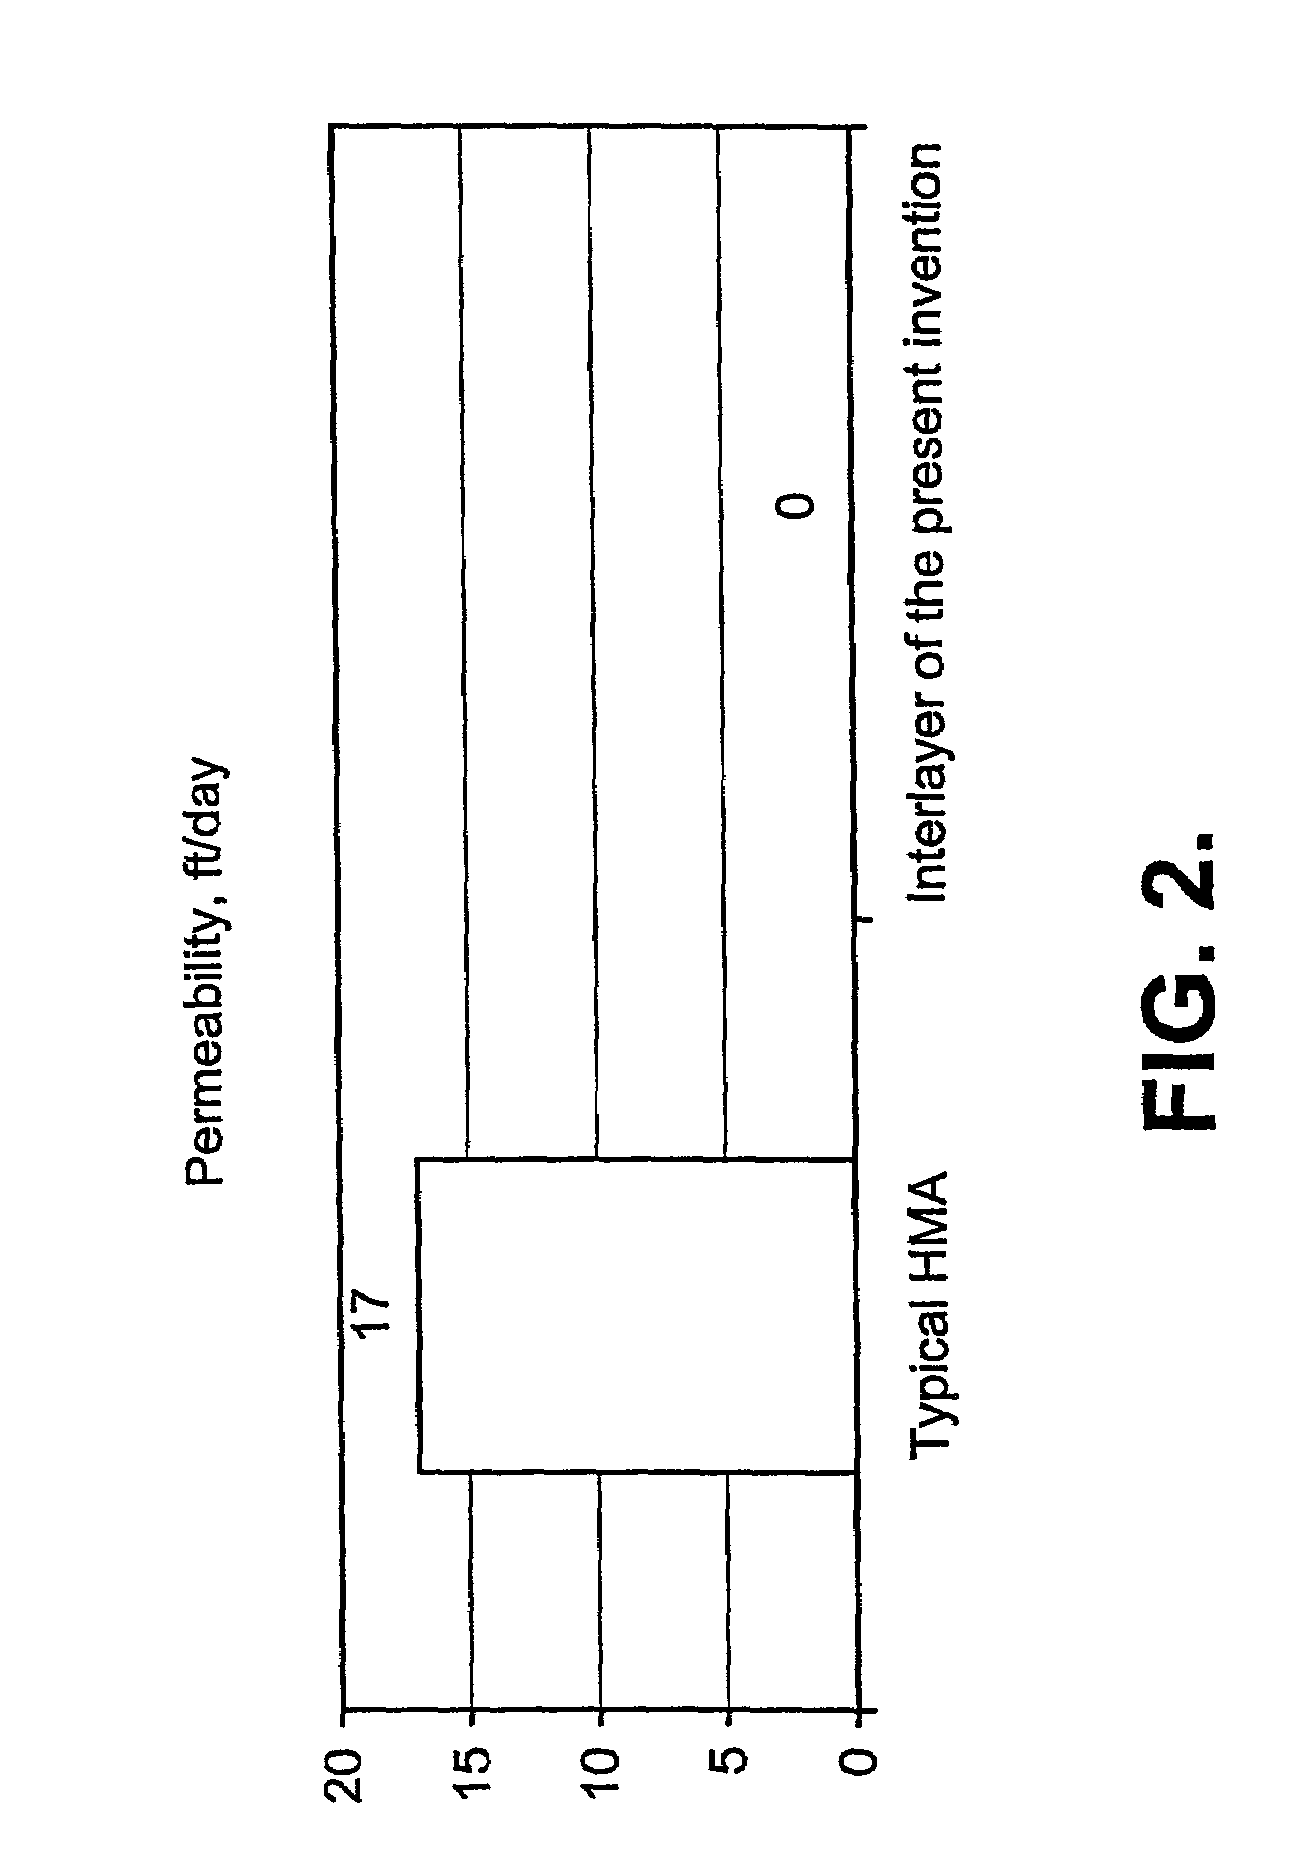 Method for selecting an asphalt mixture for making an interlayer and method of making an interlayer